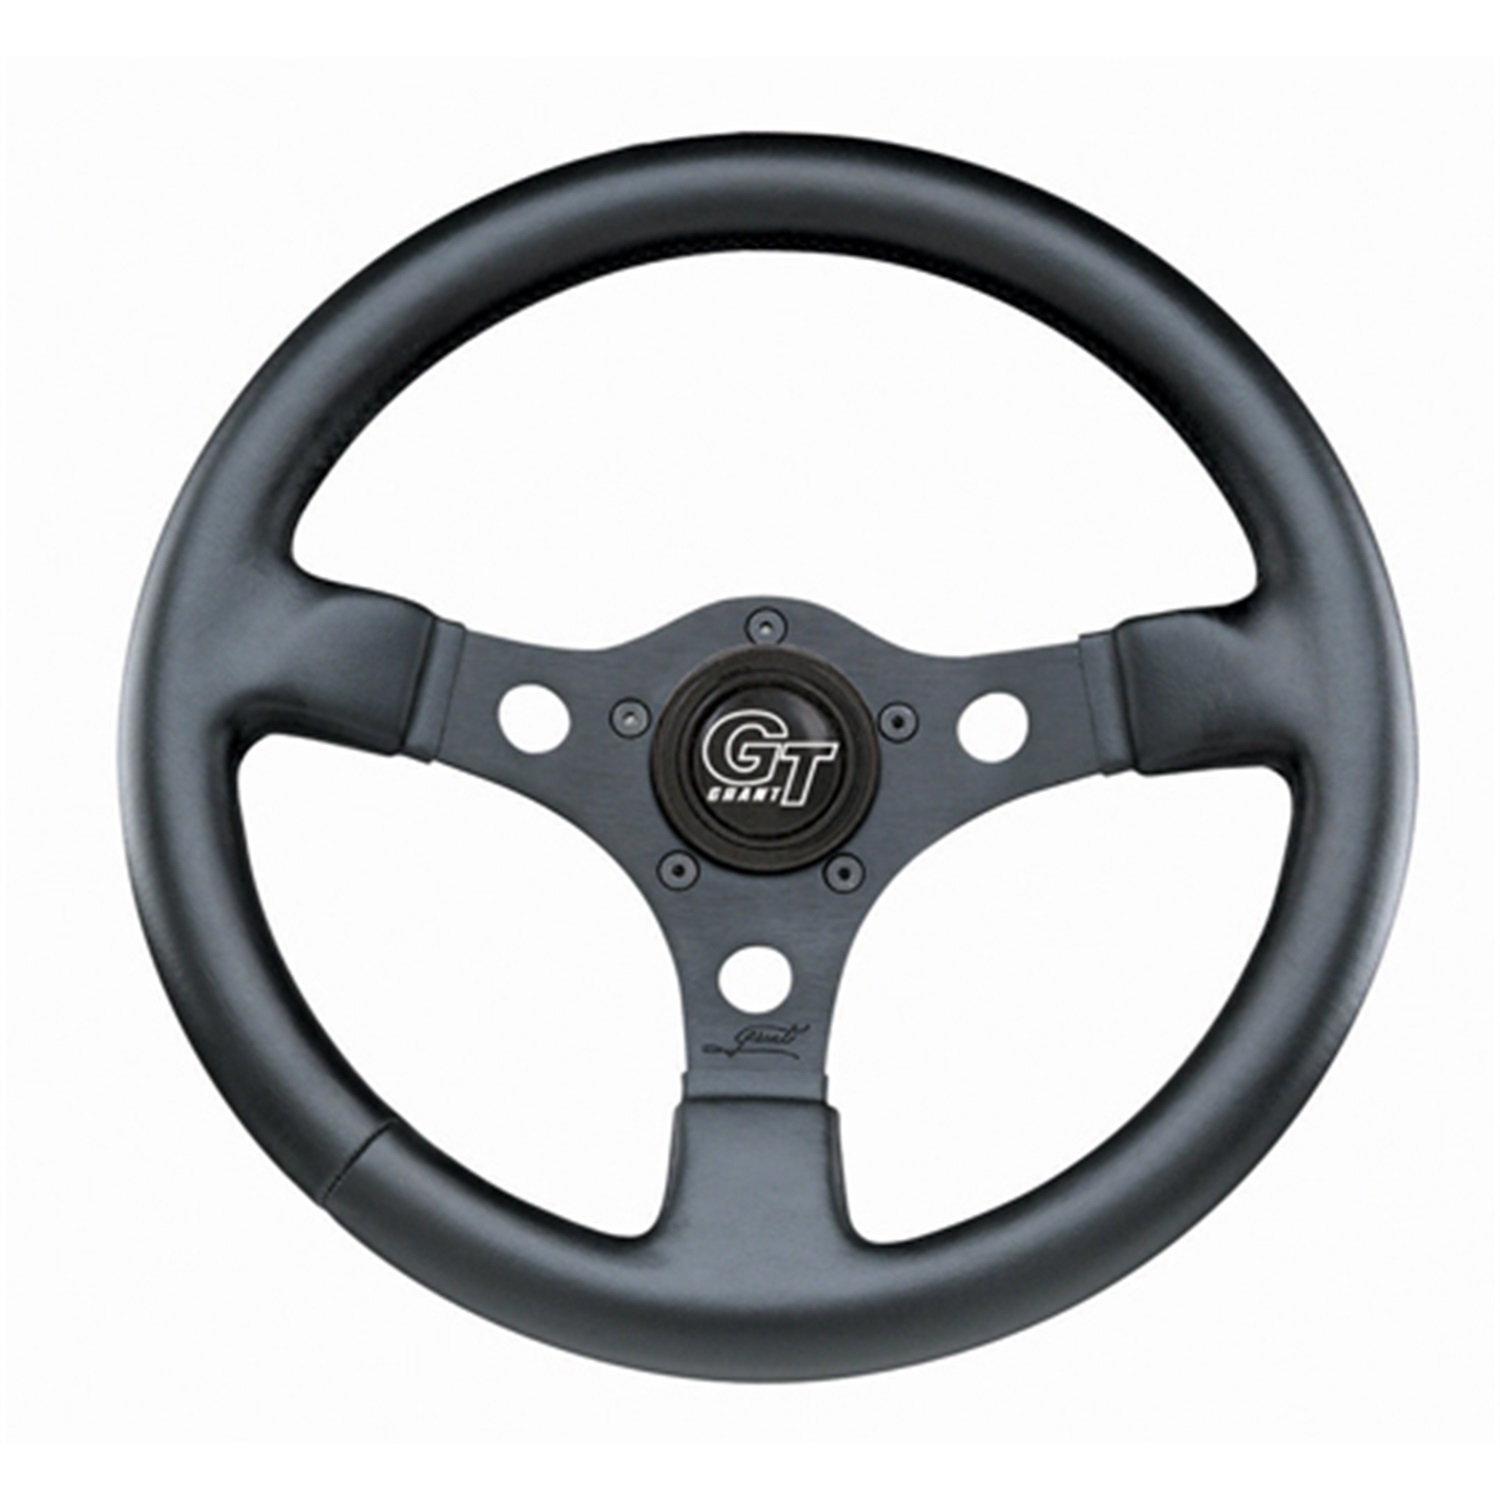 Grant 772 Formula GT Steering Wheel